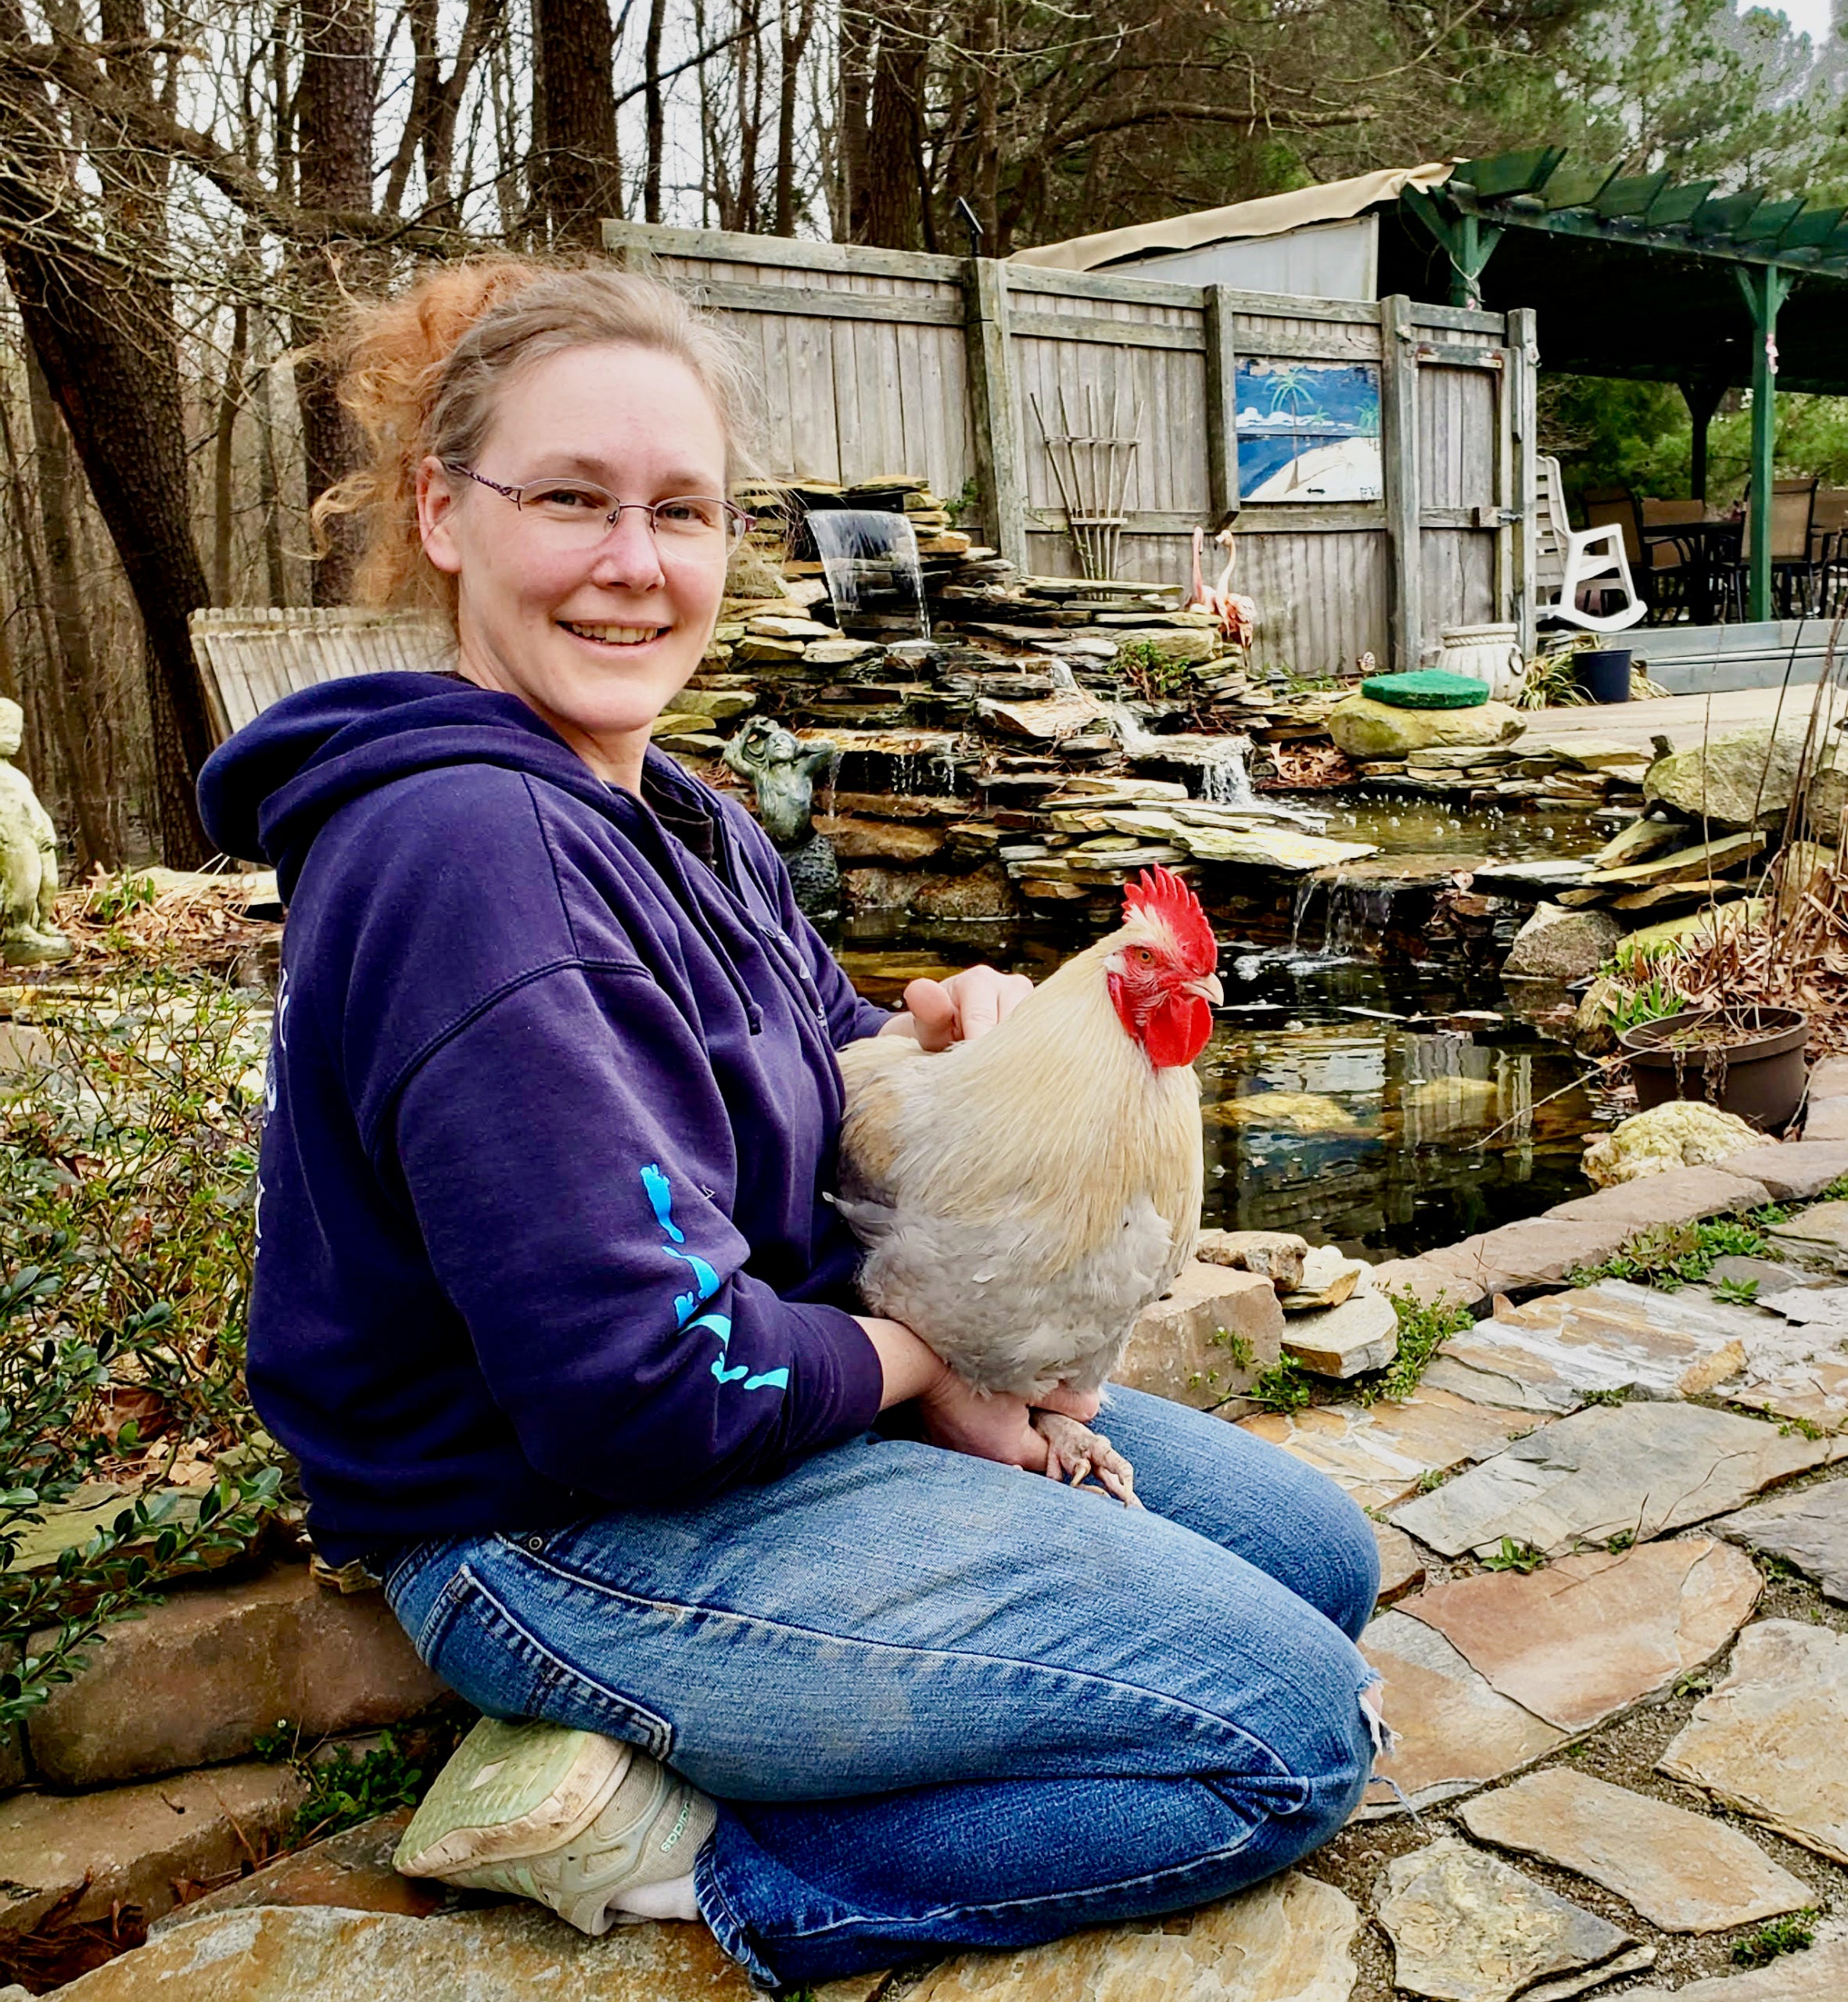 Introducing Jordana - Manager at My Pet Chicken